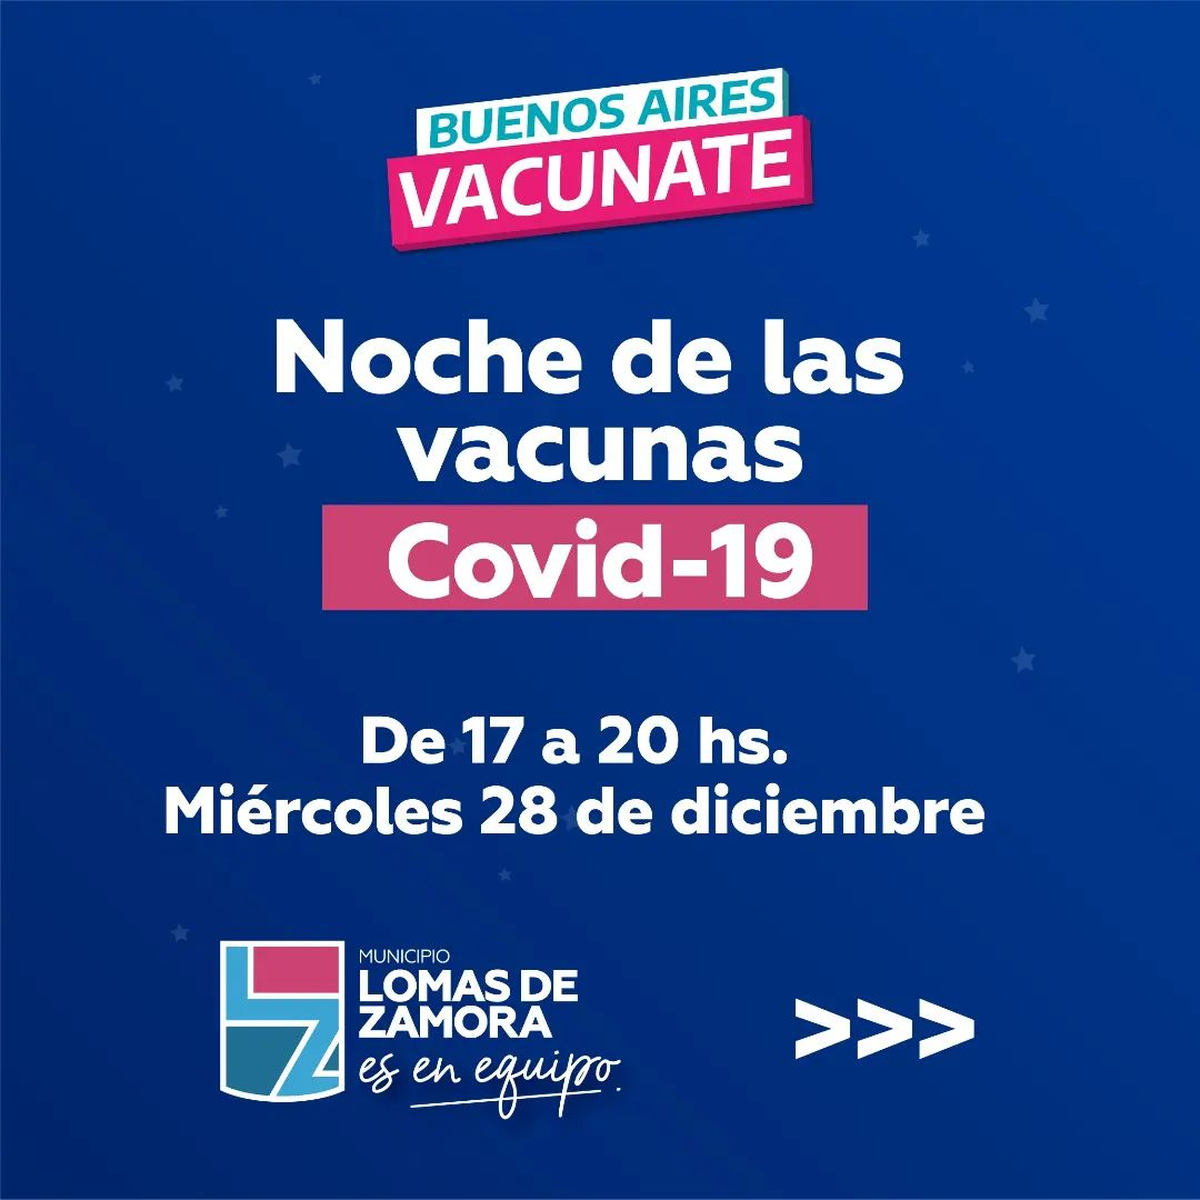 Habrá centros vacunatorios habilitados en diferentes puntos de Lomas de Zamora. 